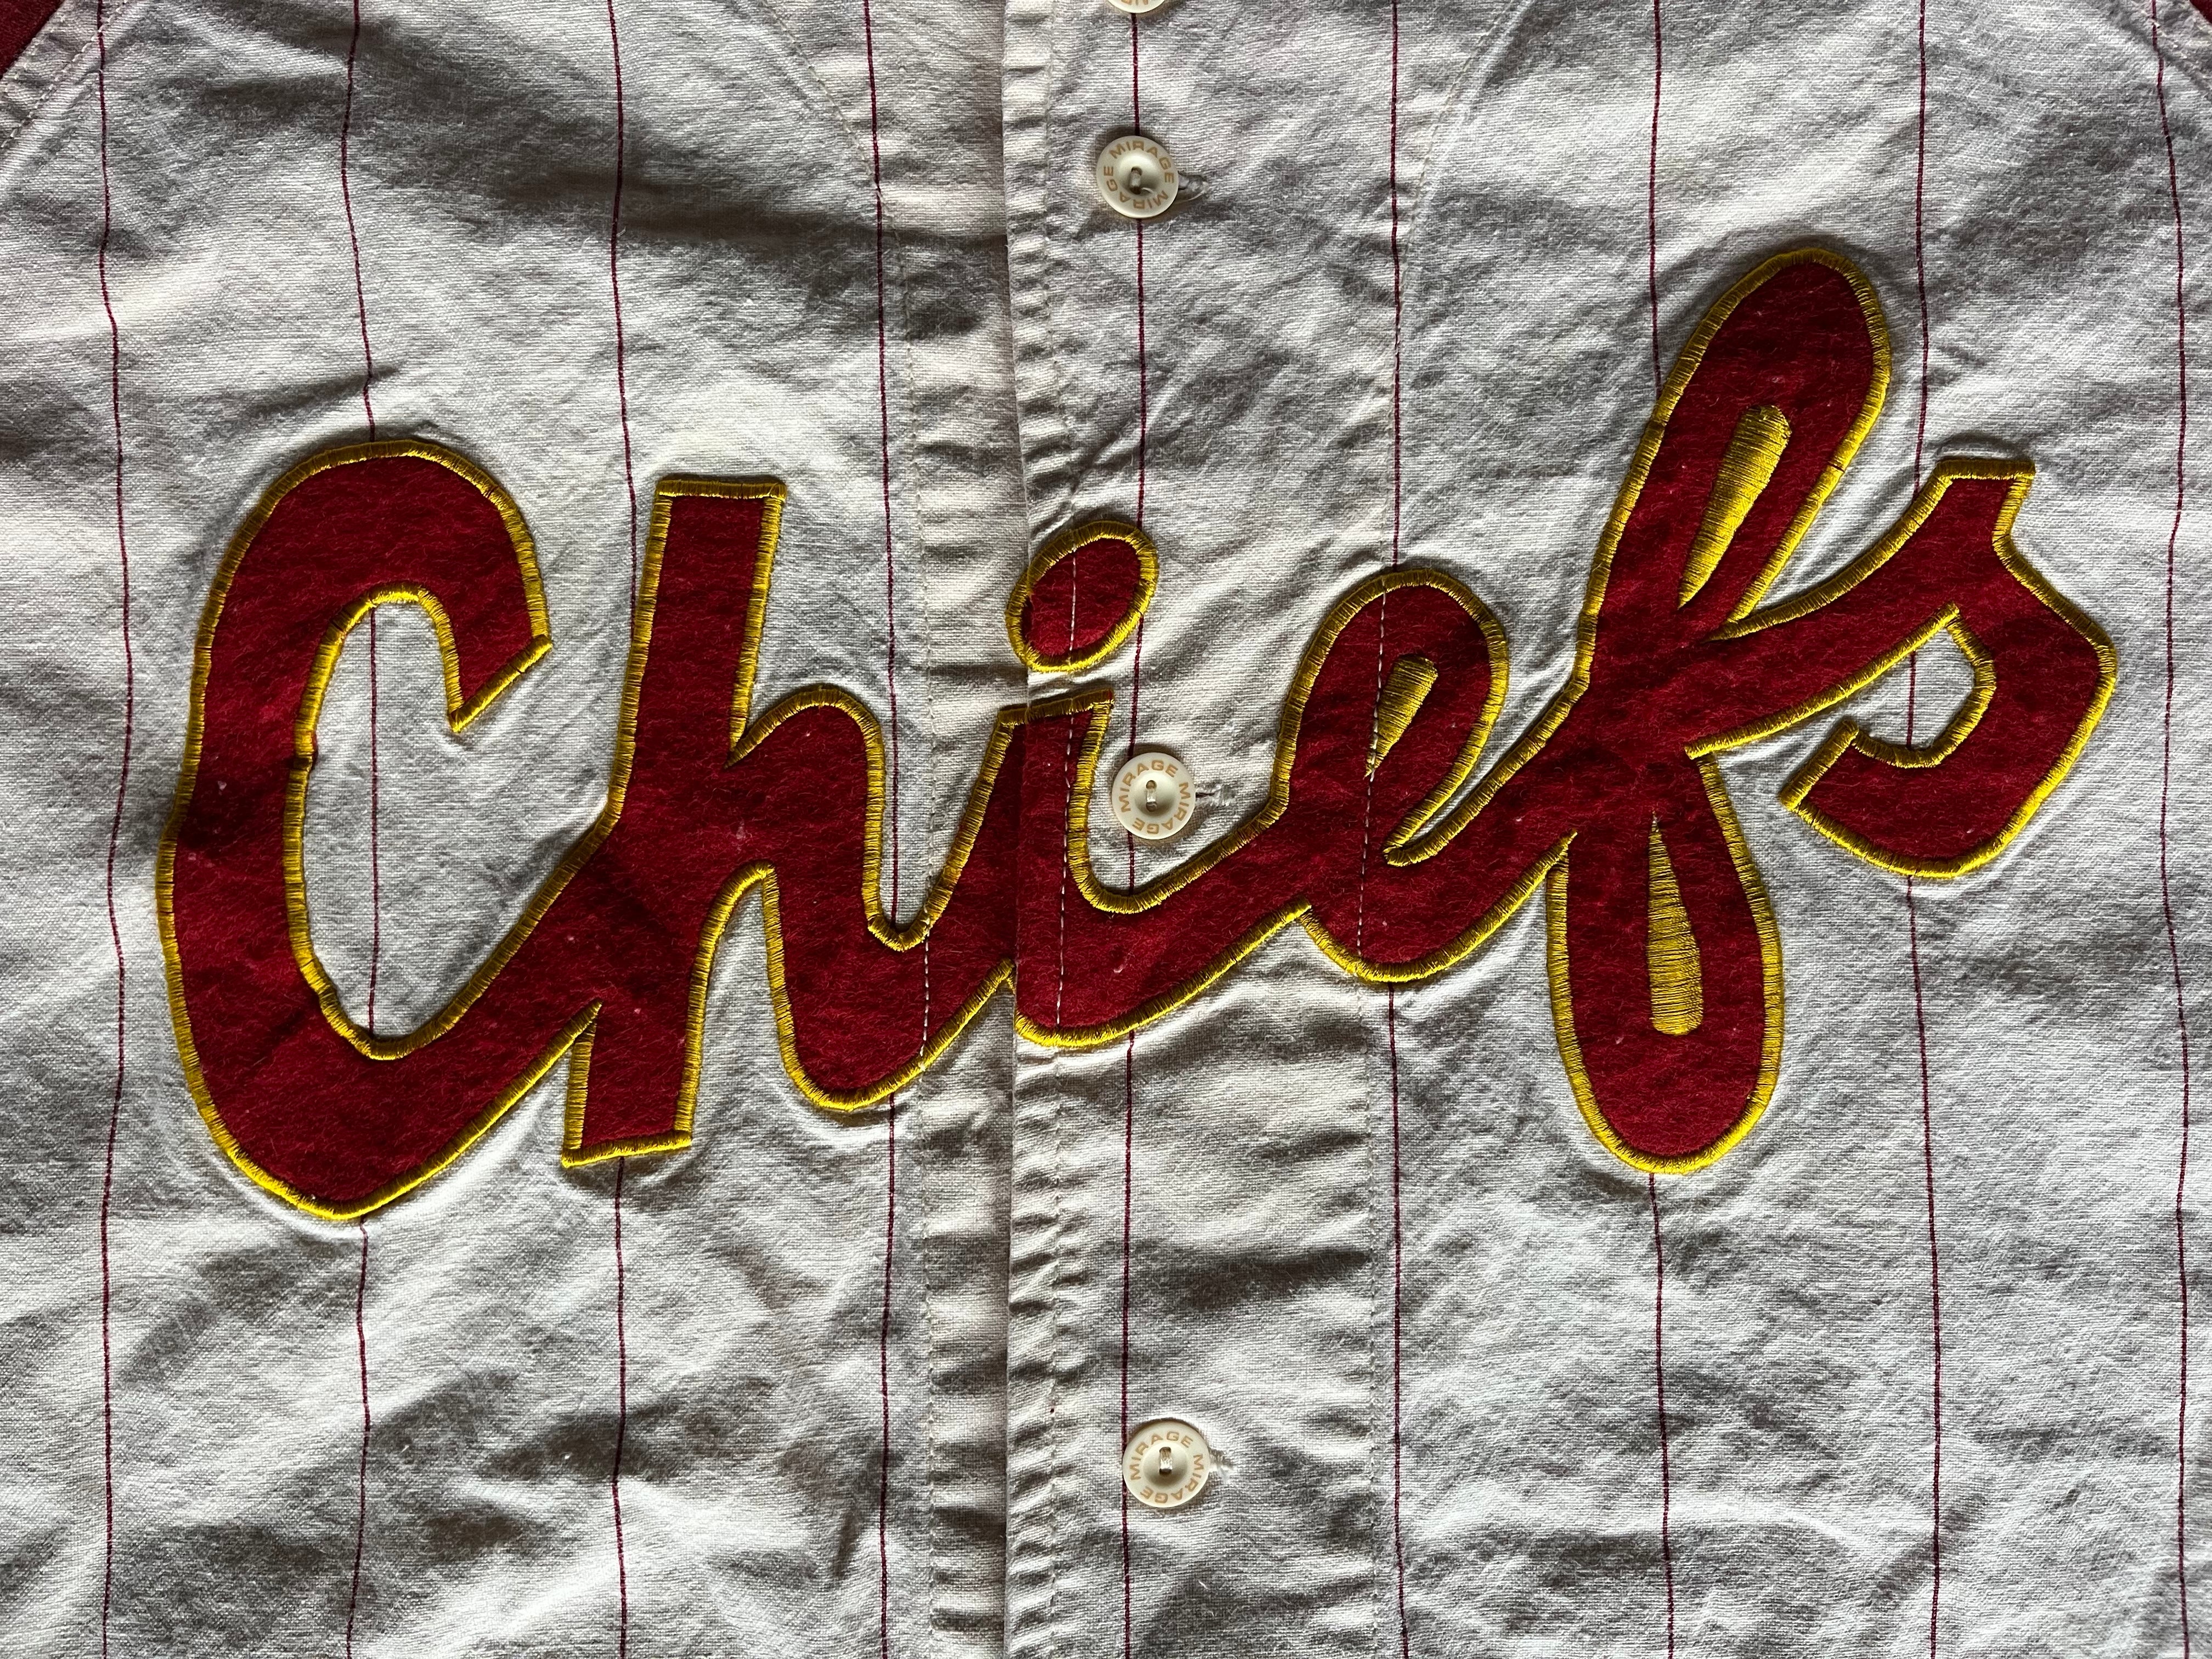 Vintage 90's Mirage Kansas City Chiefs Baseball Jersey Mens 2XL  Embroidered